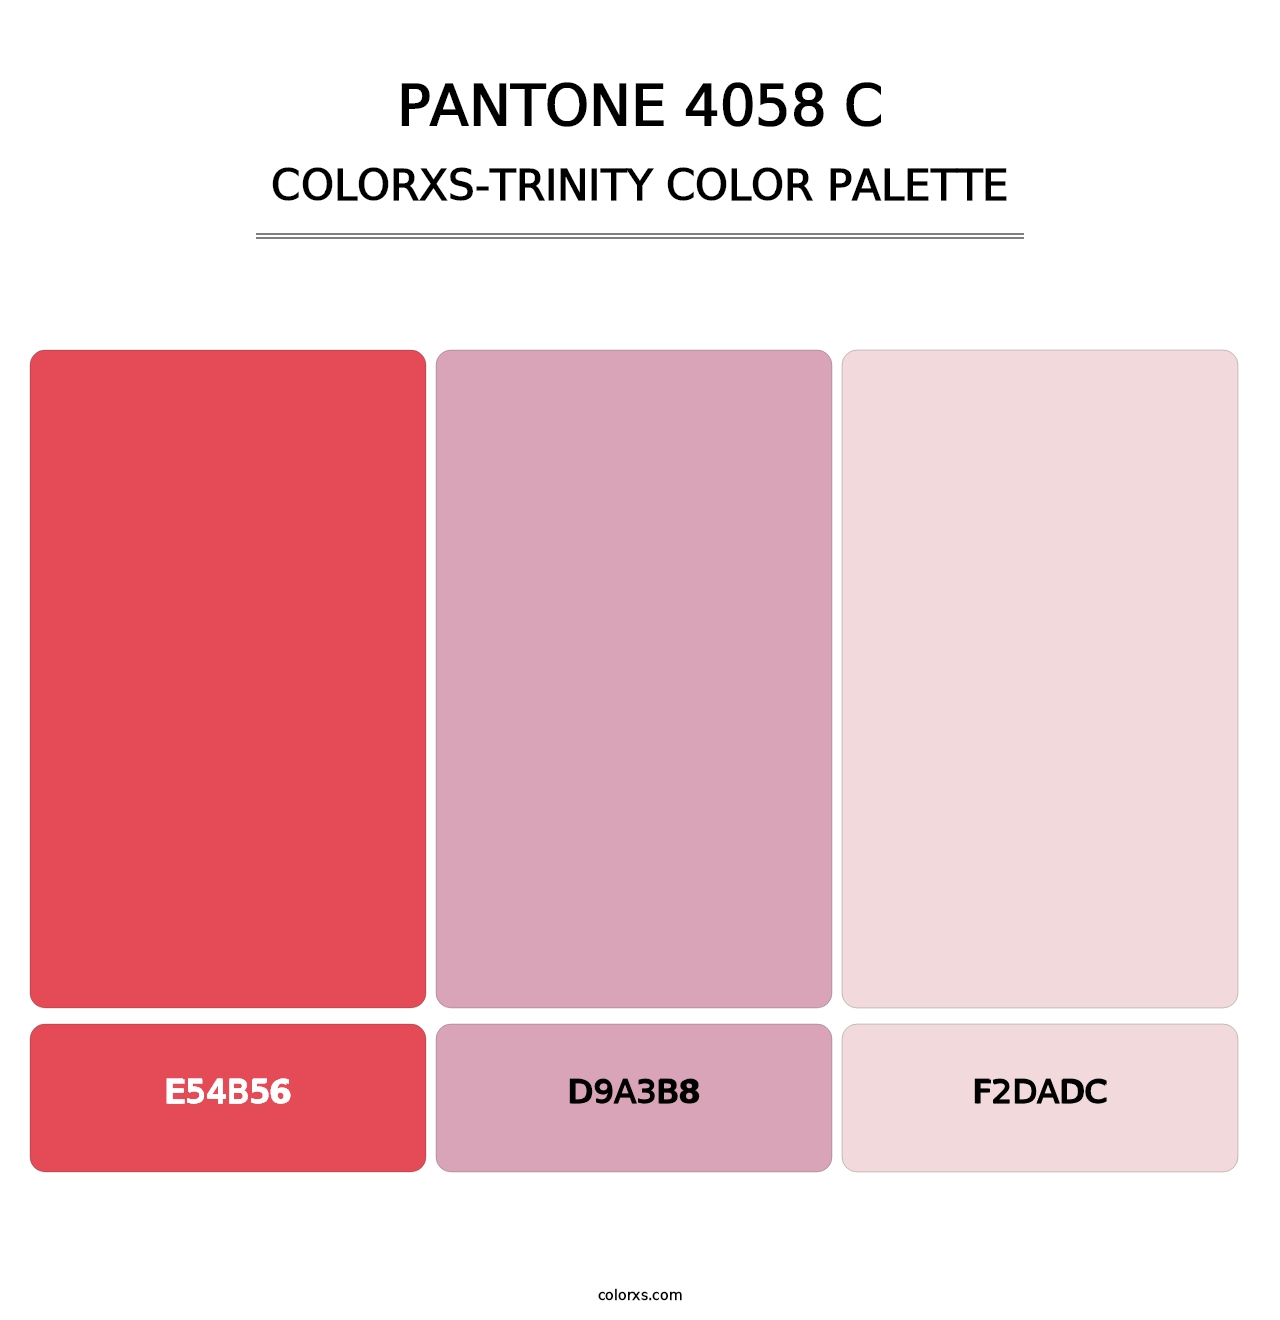 PANTONE 4058 C - Colorxs Trinity Palette